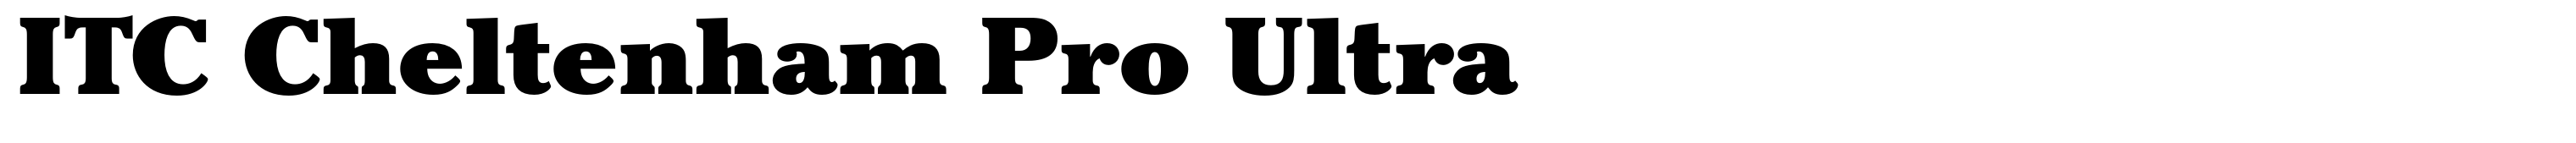 ITC Cheltenham Pro Ultra